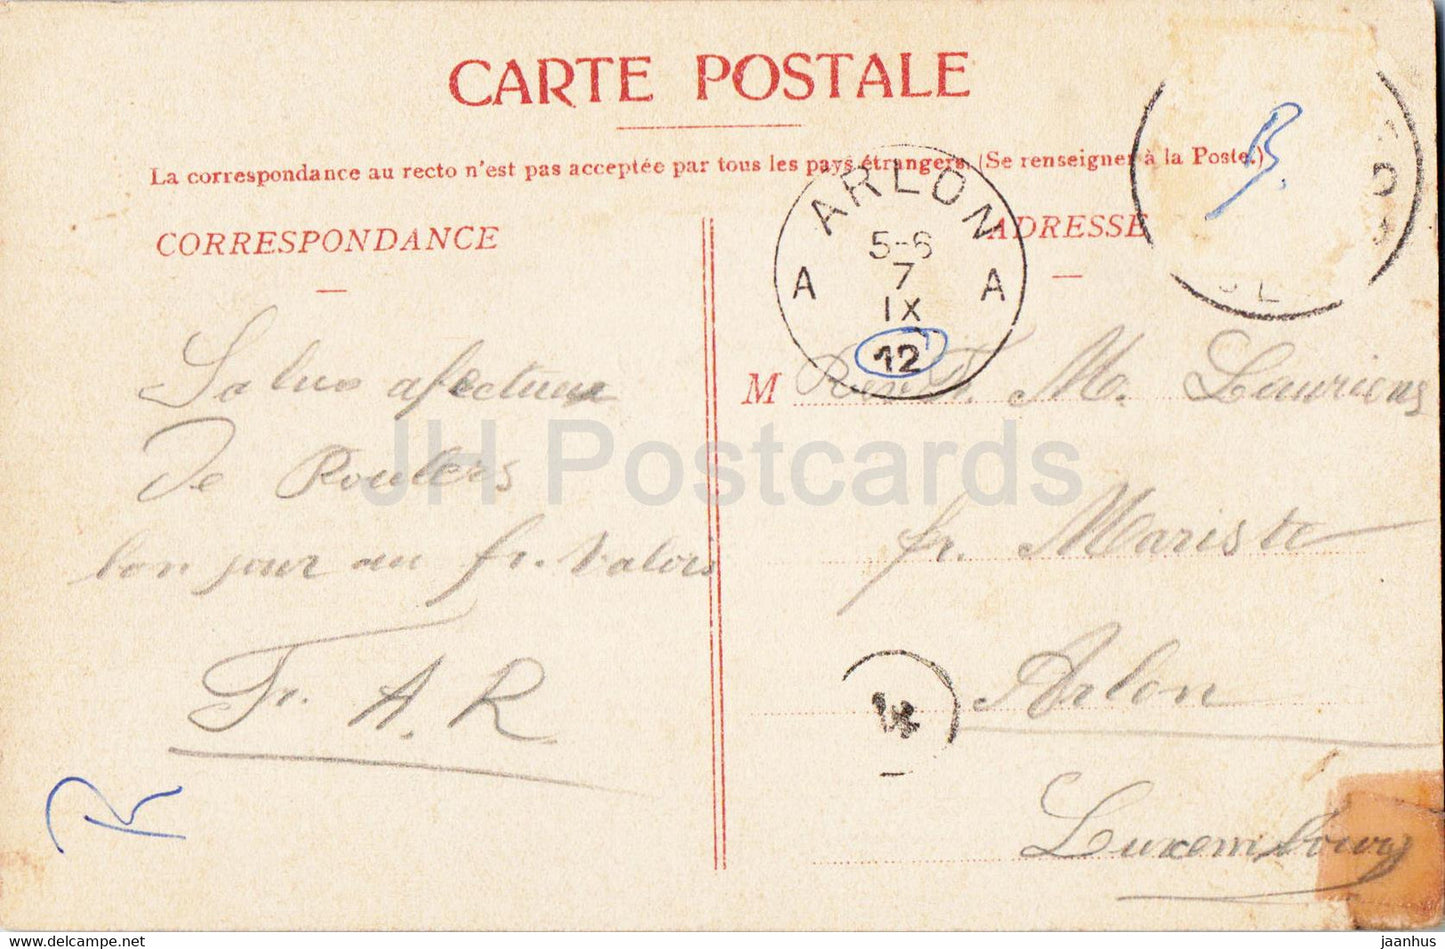 Roeselare - Rousselare Omstreken - Kasteel Graaf de Limbourg Stirum - Rumbeke - carte postale ancienne - 1912 - Belgique - d'occasion